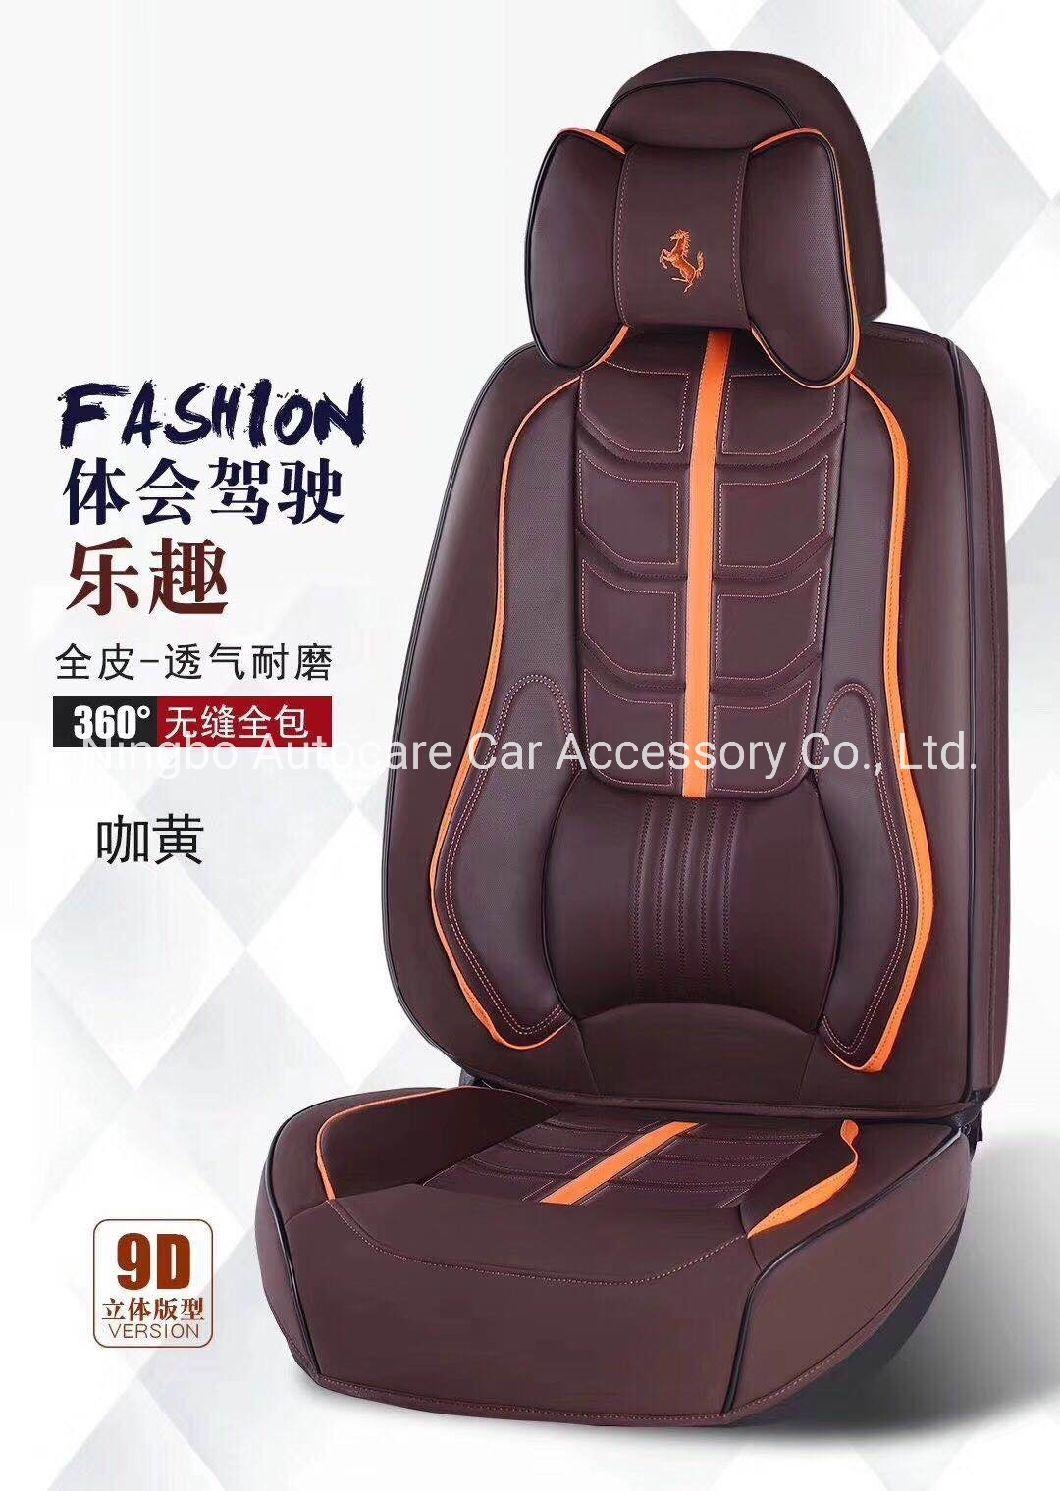 New Fashion 9d Car Seat Cushion High Quality New Fashion 9d Car Seat Cushion